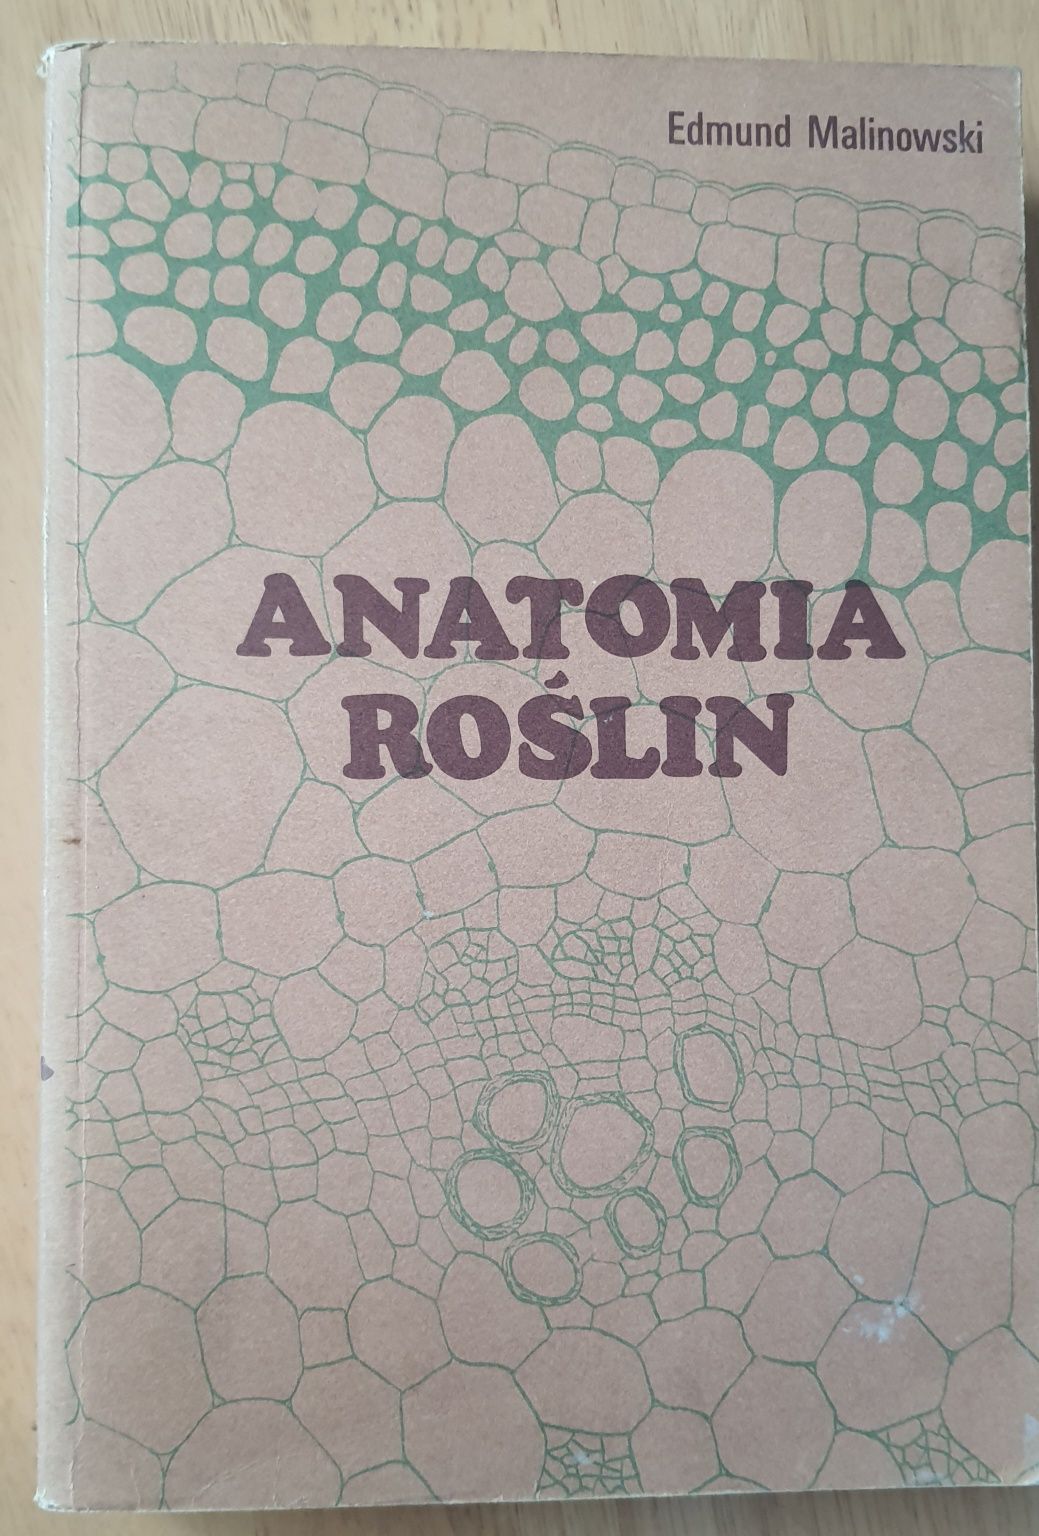 Anatomia Roślin, E. Malinowski, PWN